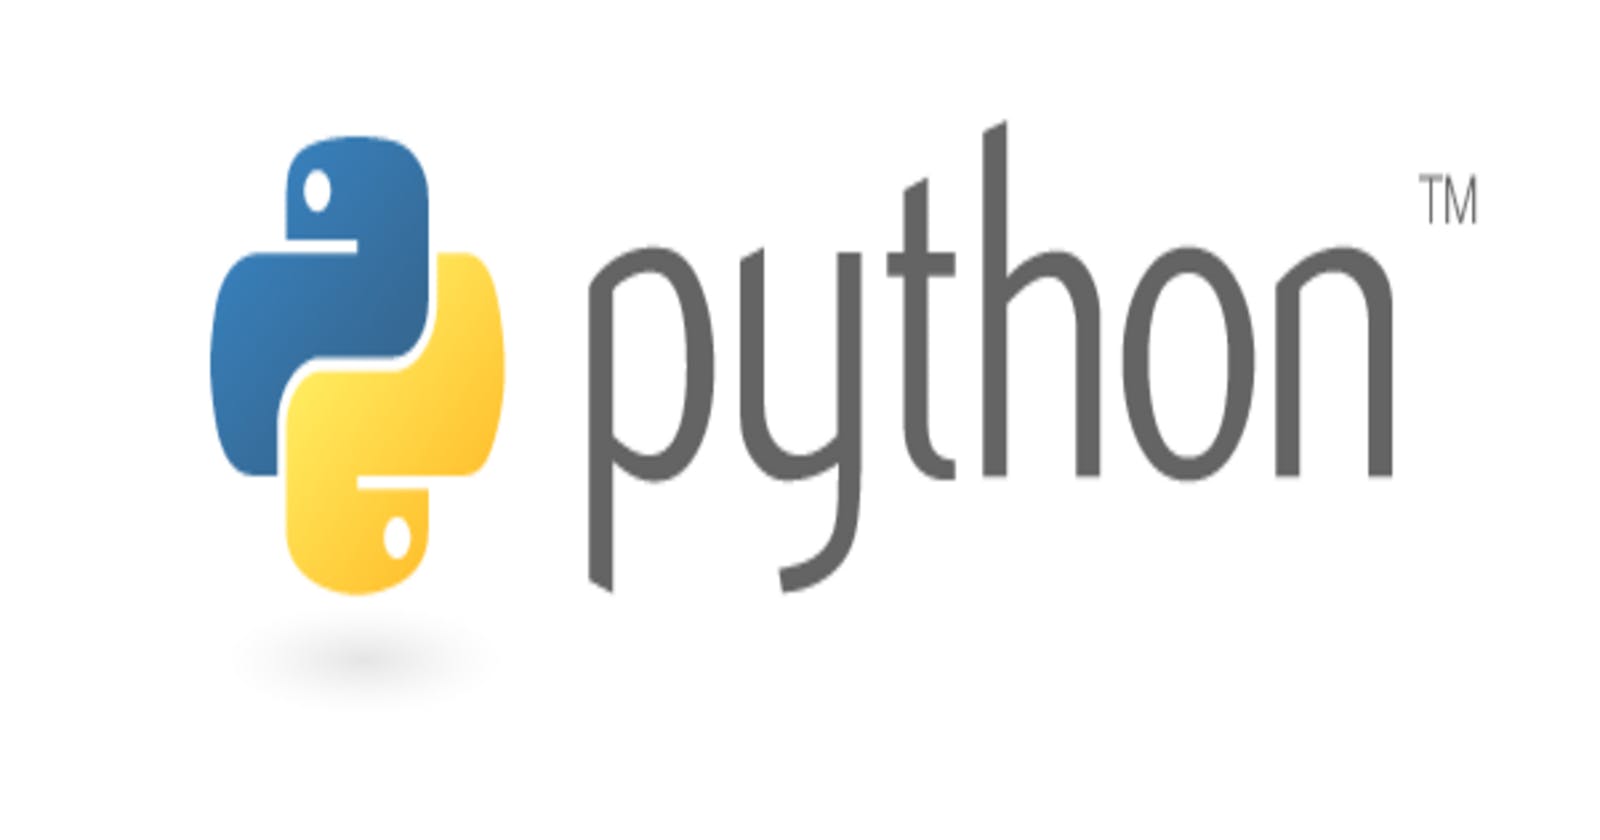 Converting Text To Speech Using Python